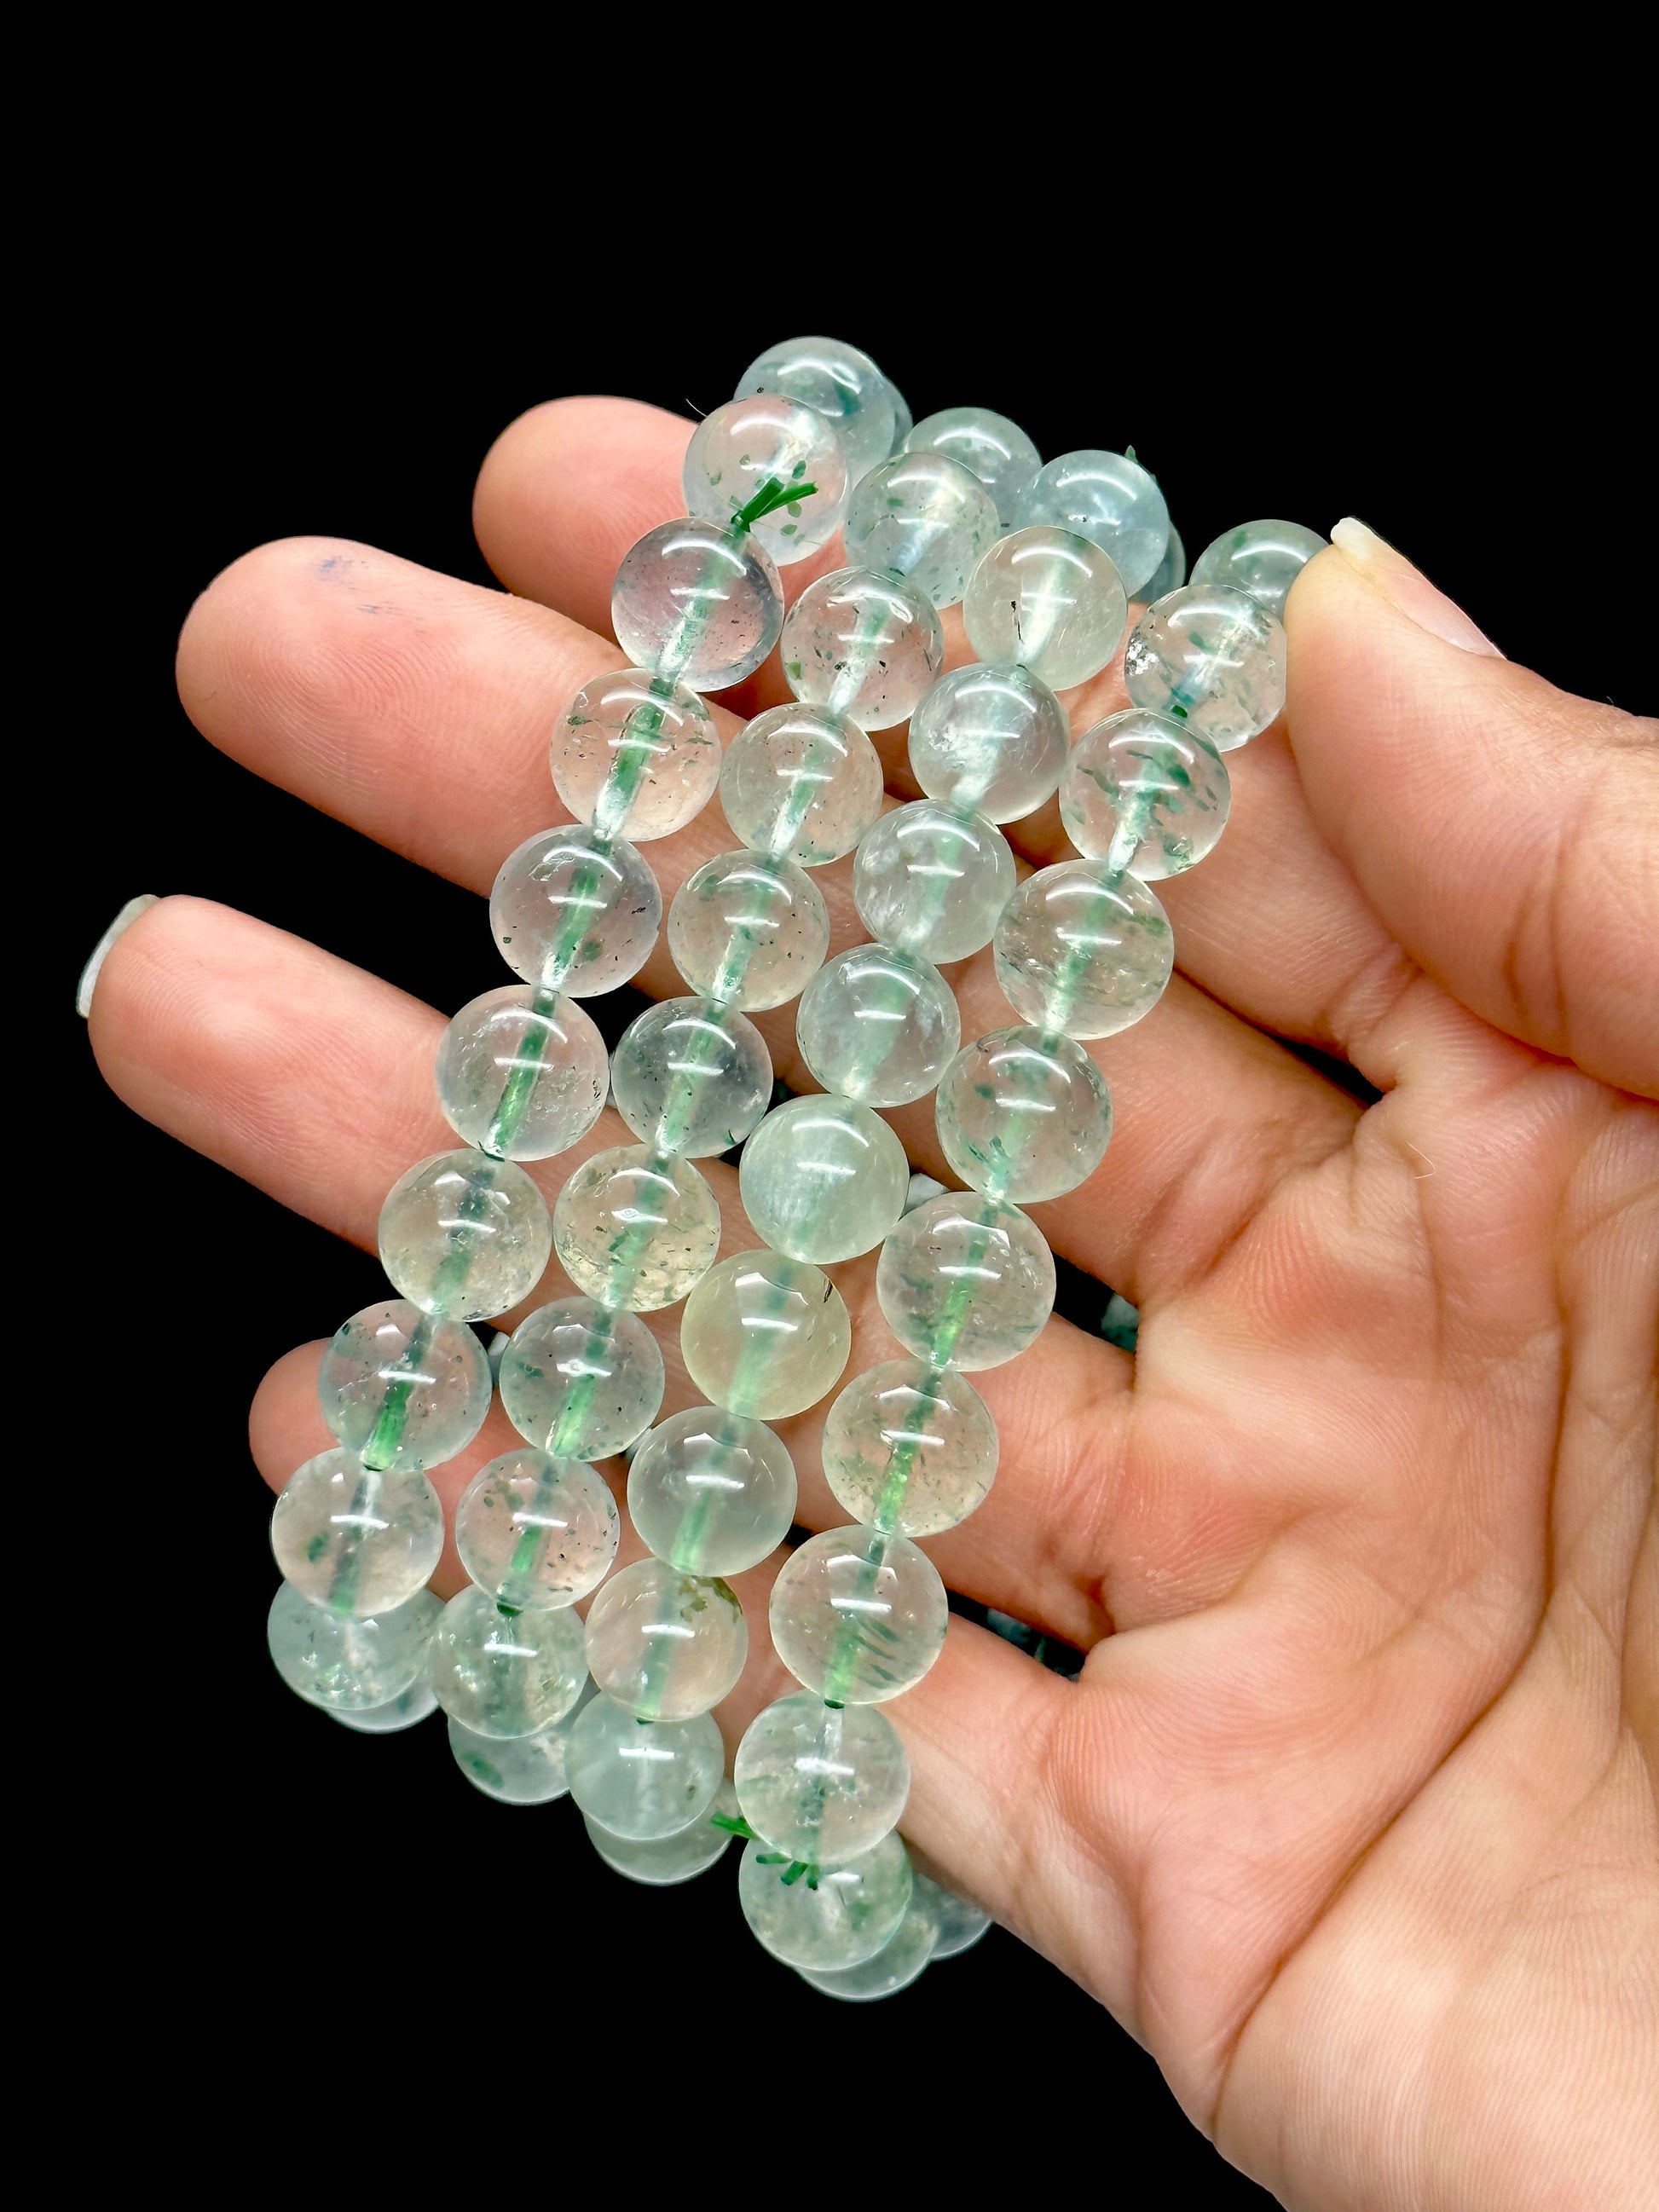 9mm Natural Clear Quartz Green Phantom Crystal Gemstone Round Beads Bracelet